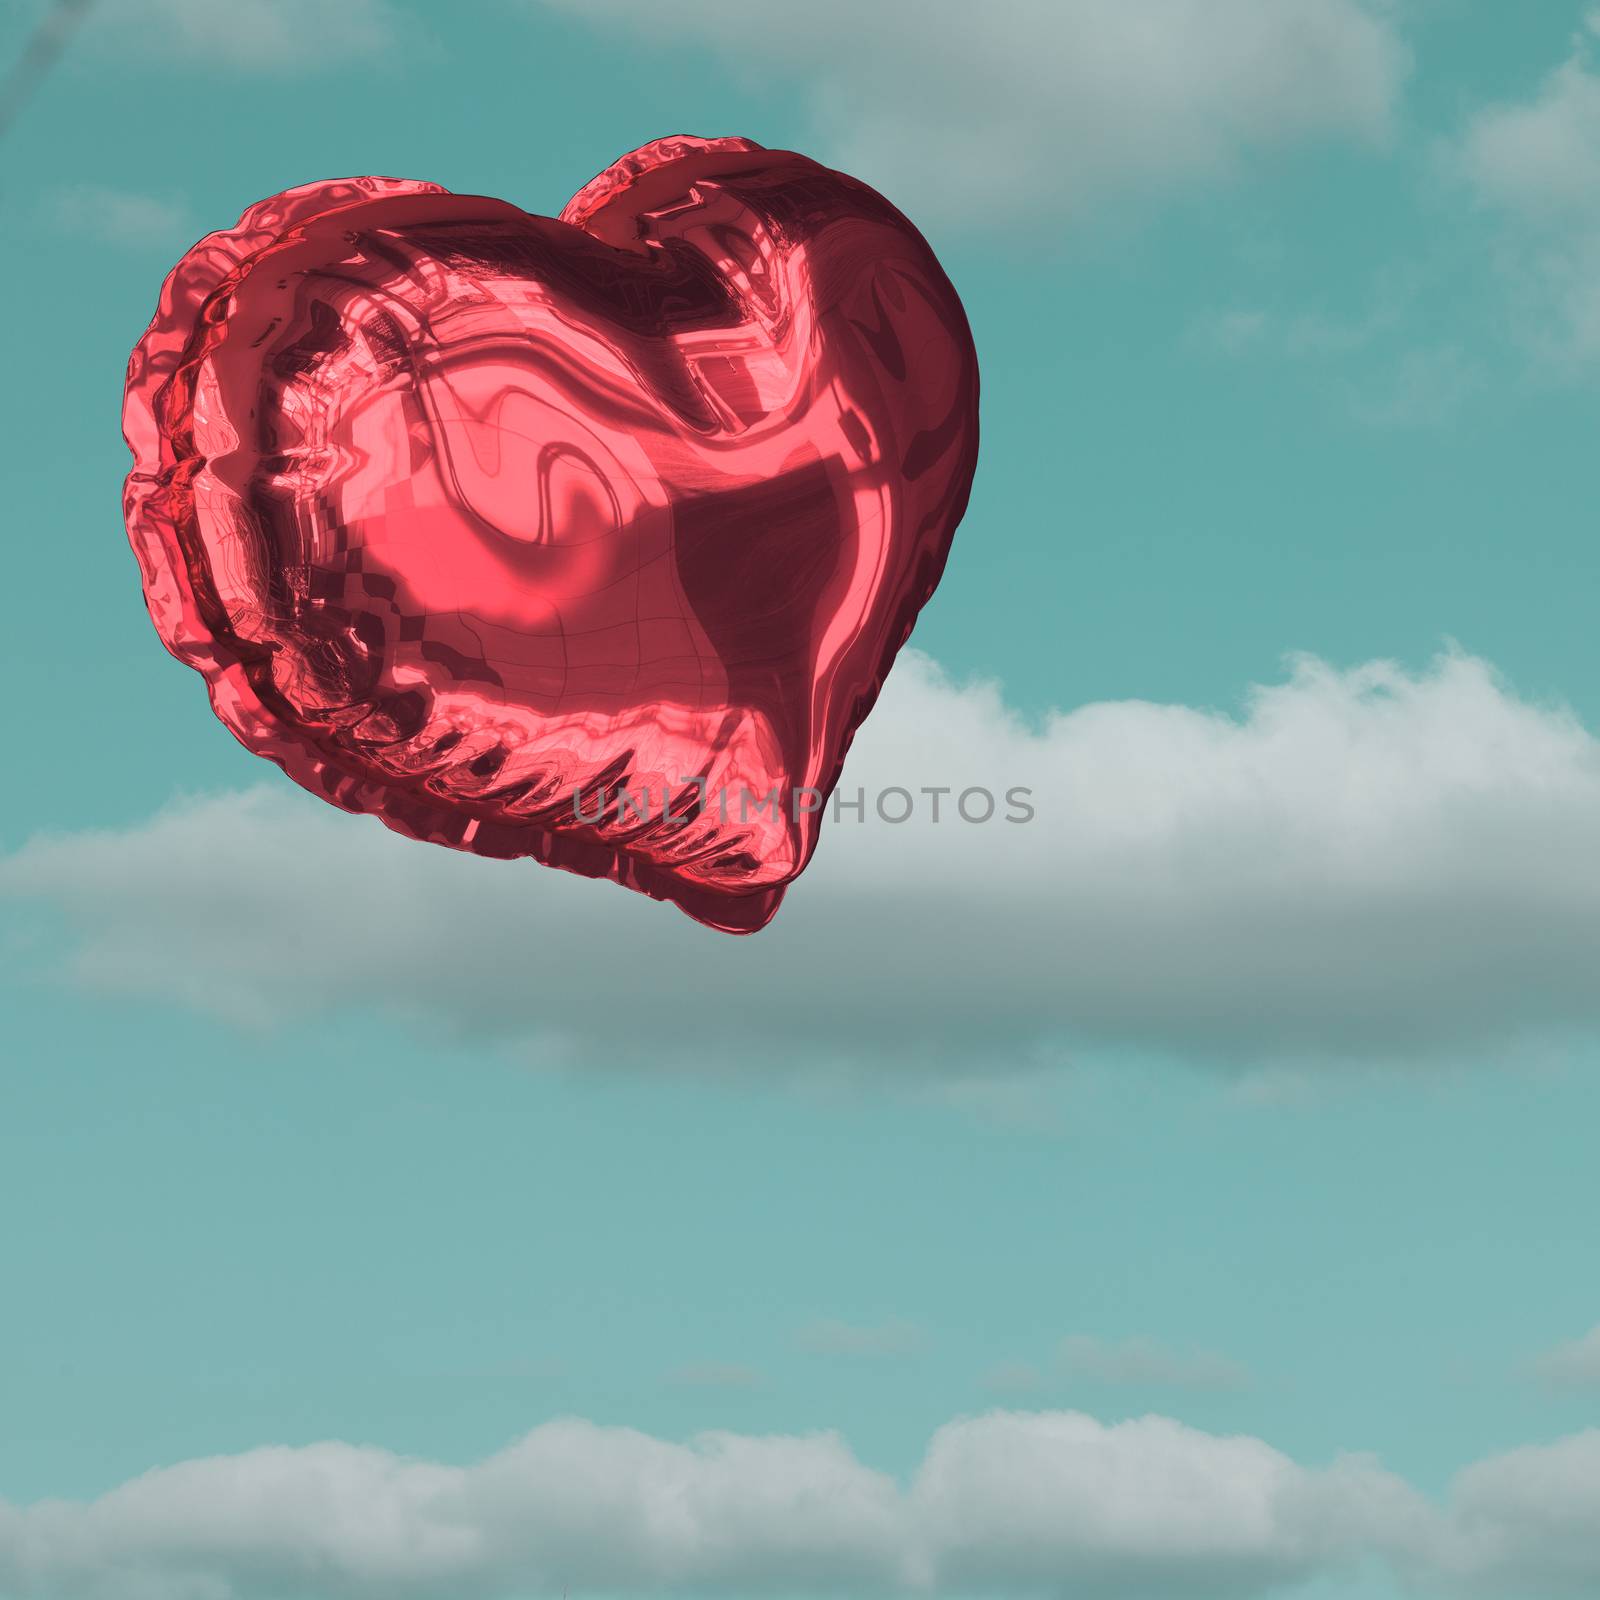 Red heart balloon against sky 